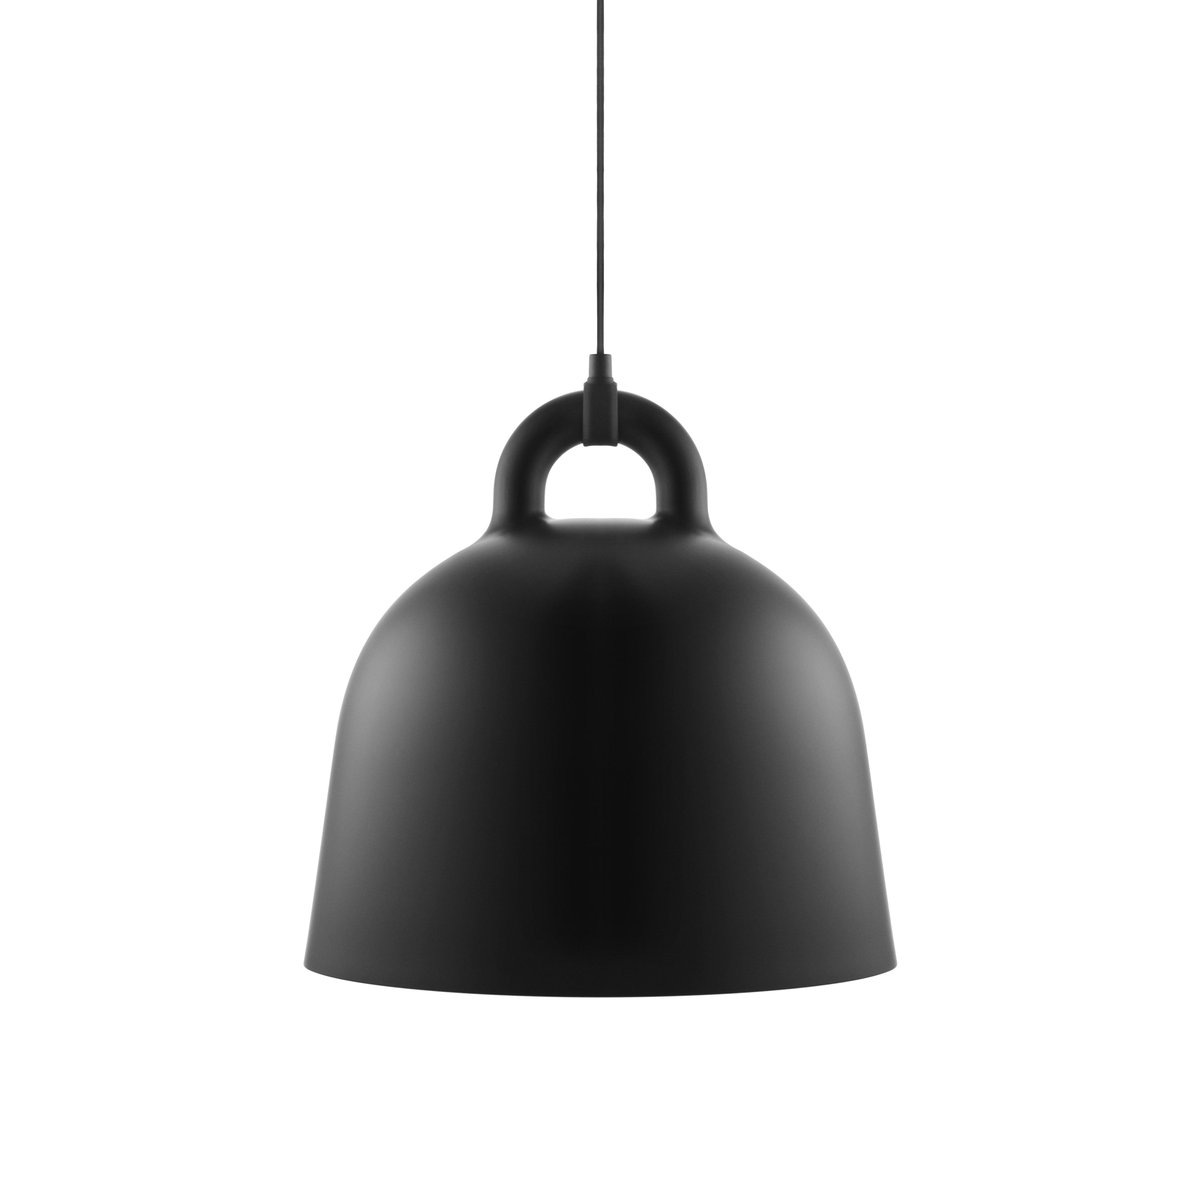 Normann Copenhagen Bell lampe sort medium